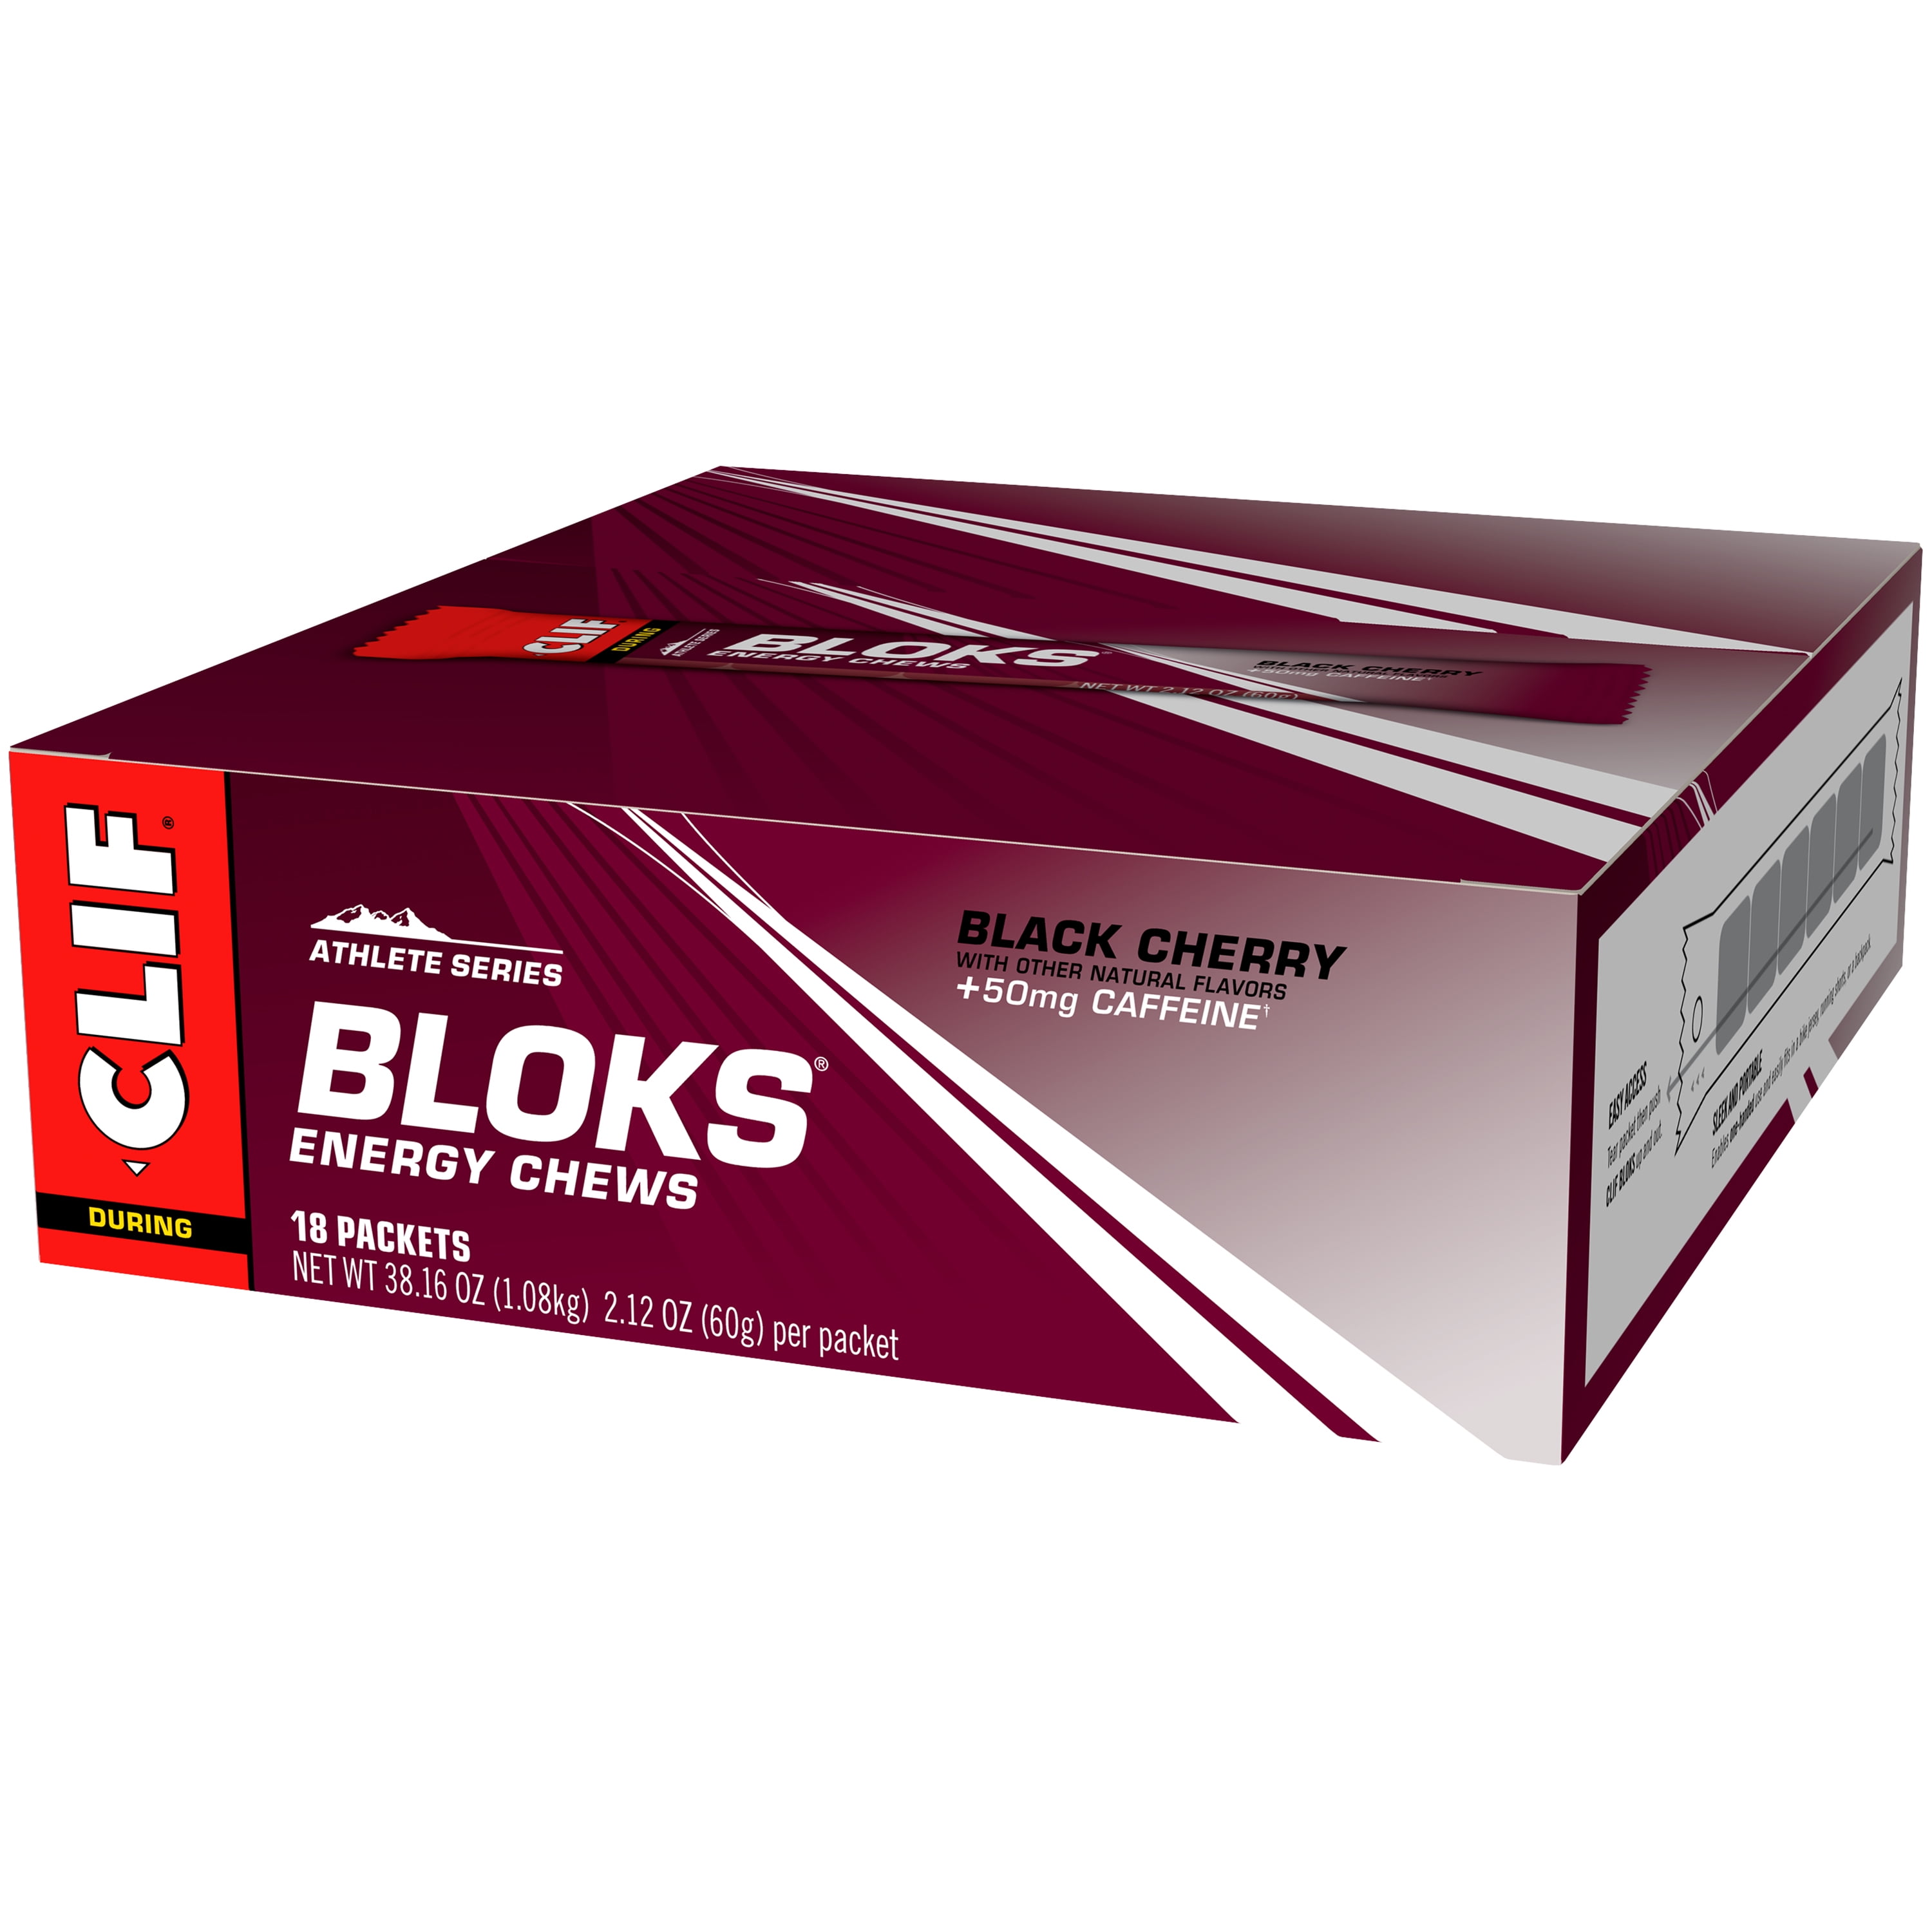 Clif Bloks Energy Chews Black Cherry Flavor 50mg Caffeine 2 12 Ounce Packets 18 Count Walmart Com Walmart Com